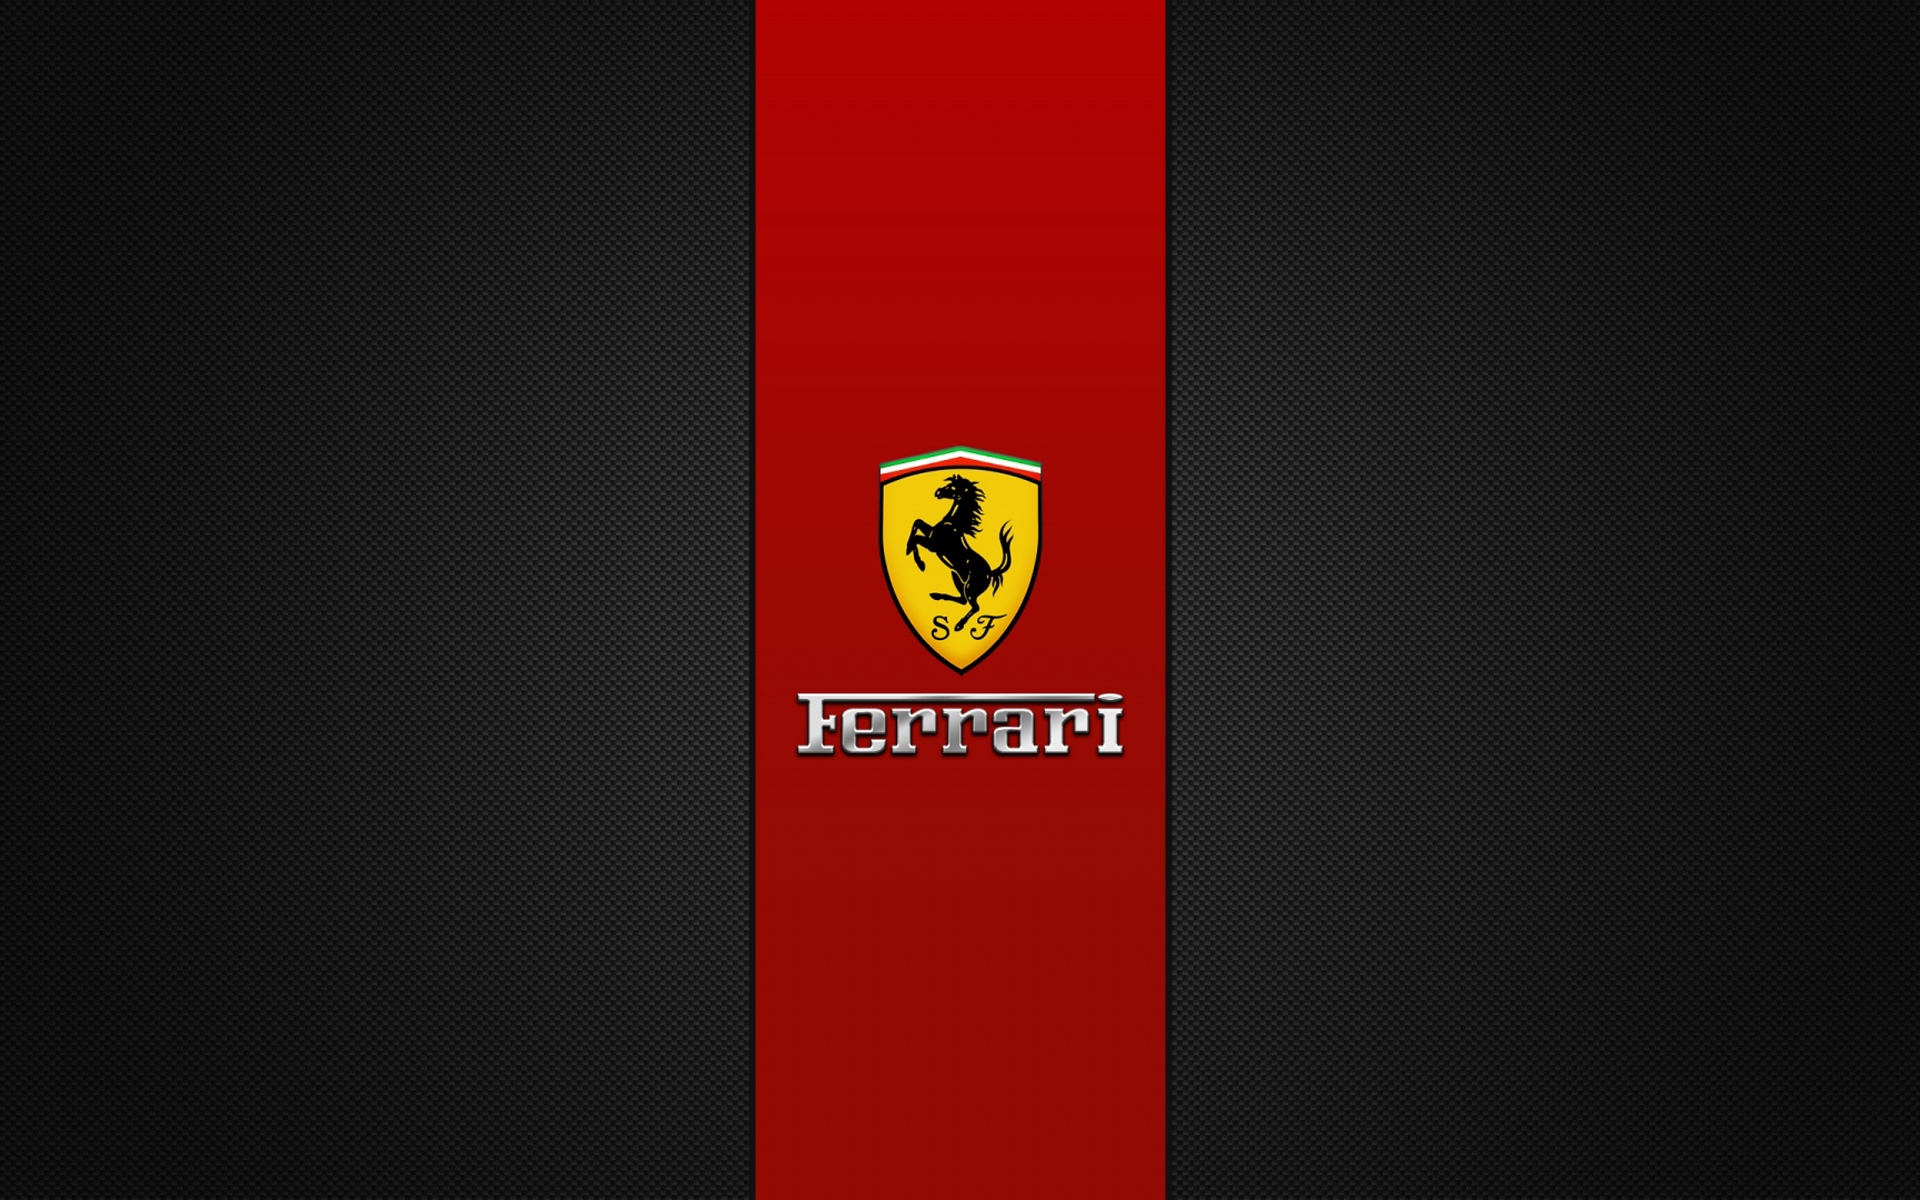 Ferrari Wallpapers HD Backgrounds Images Pics Photos Free